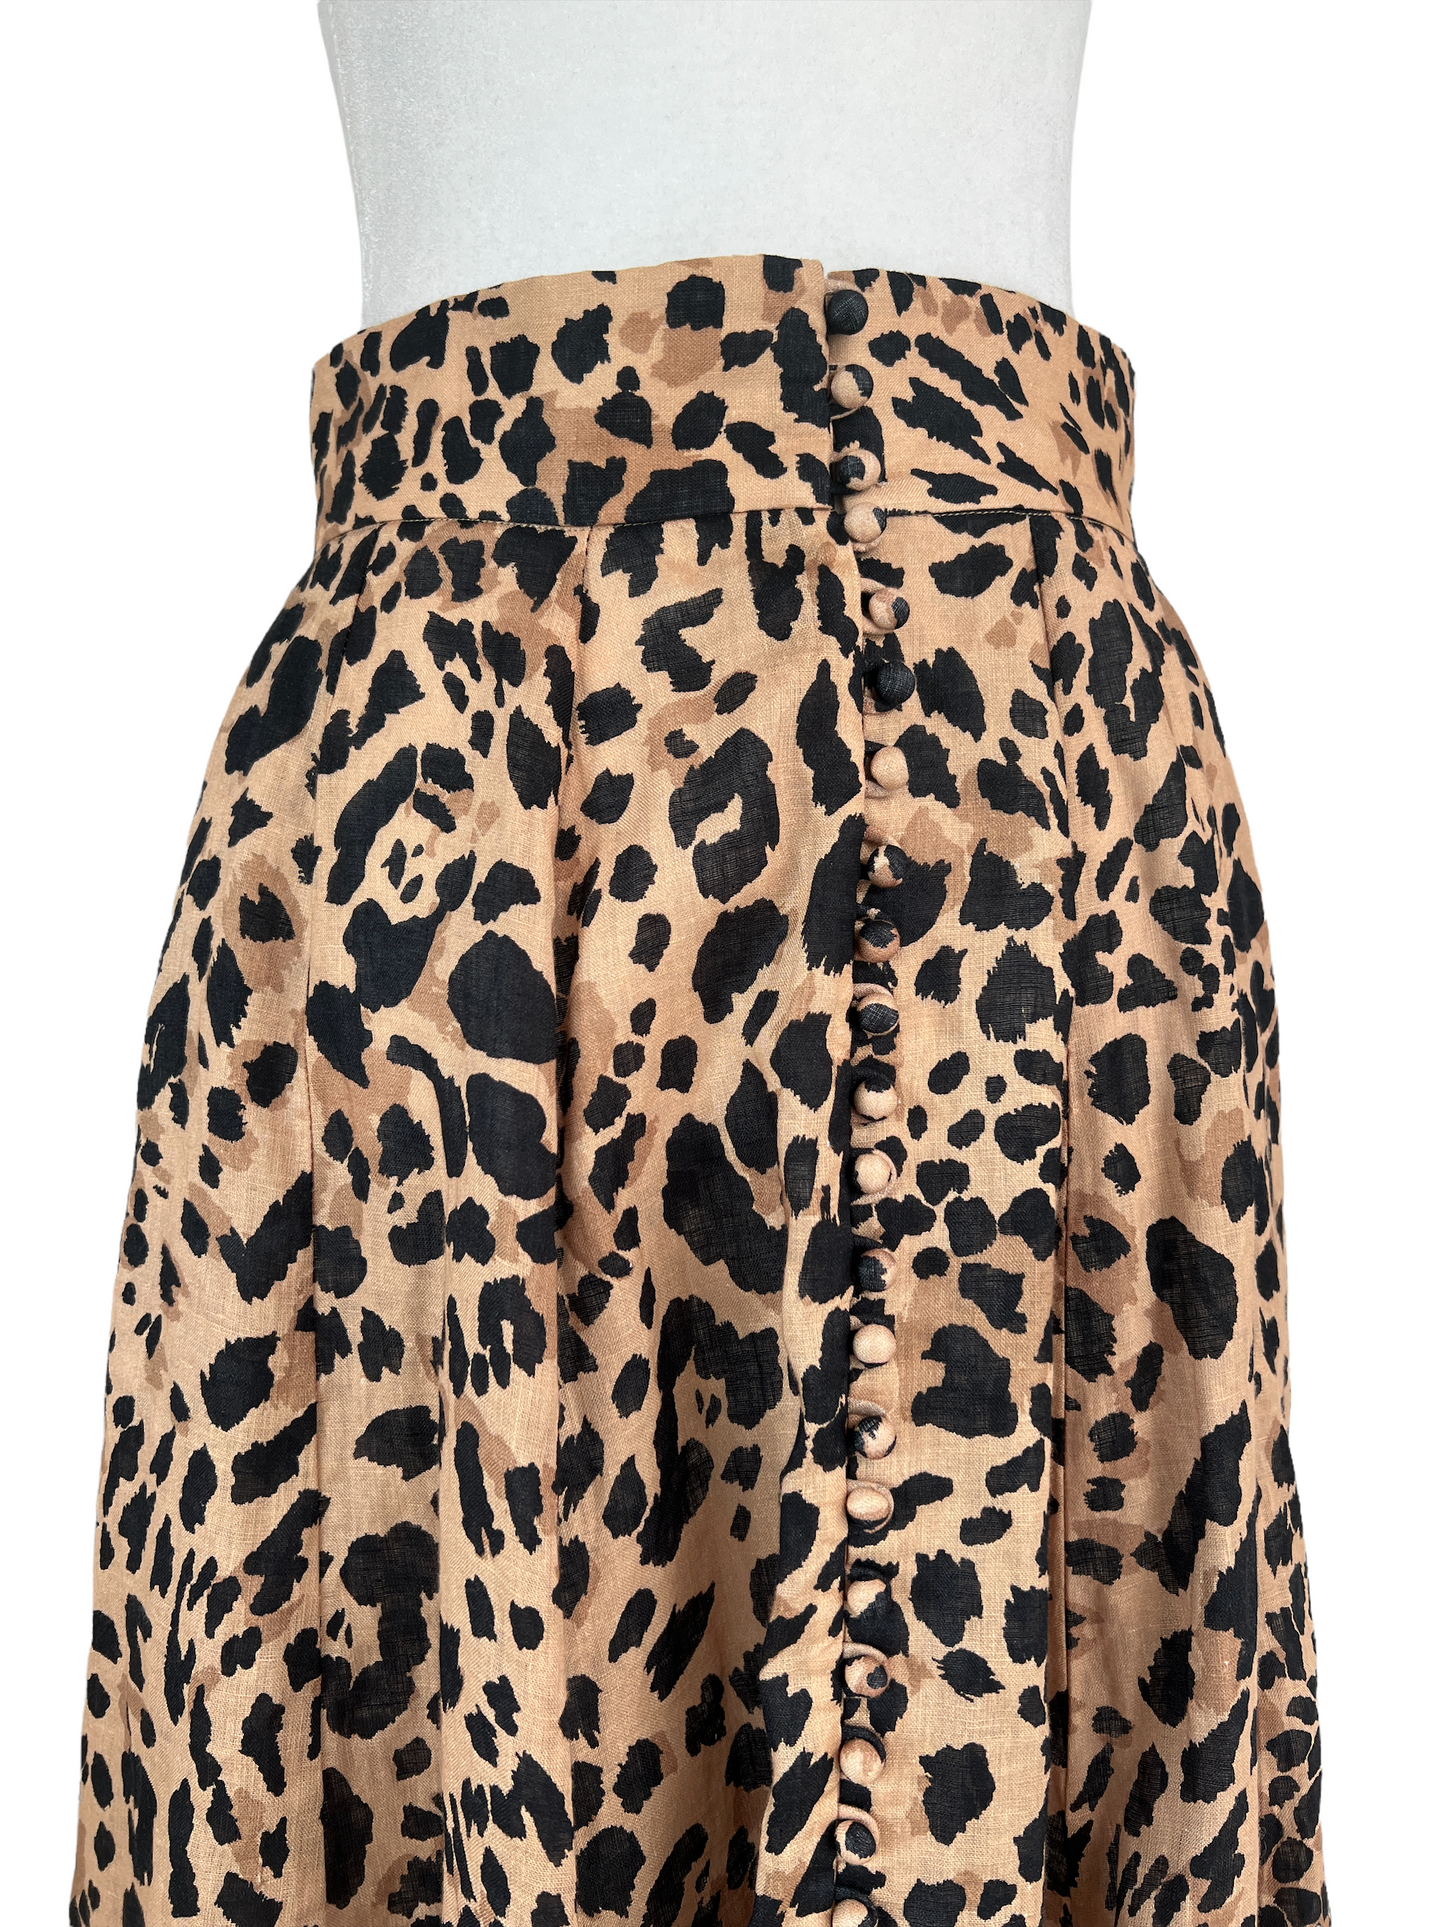 Leopard Print Skirt - 2